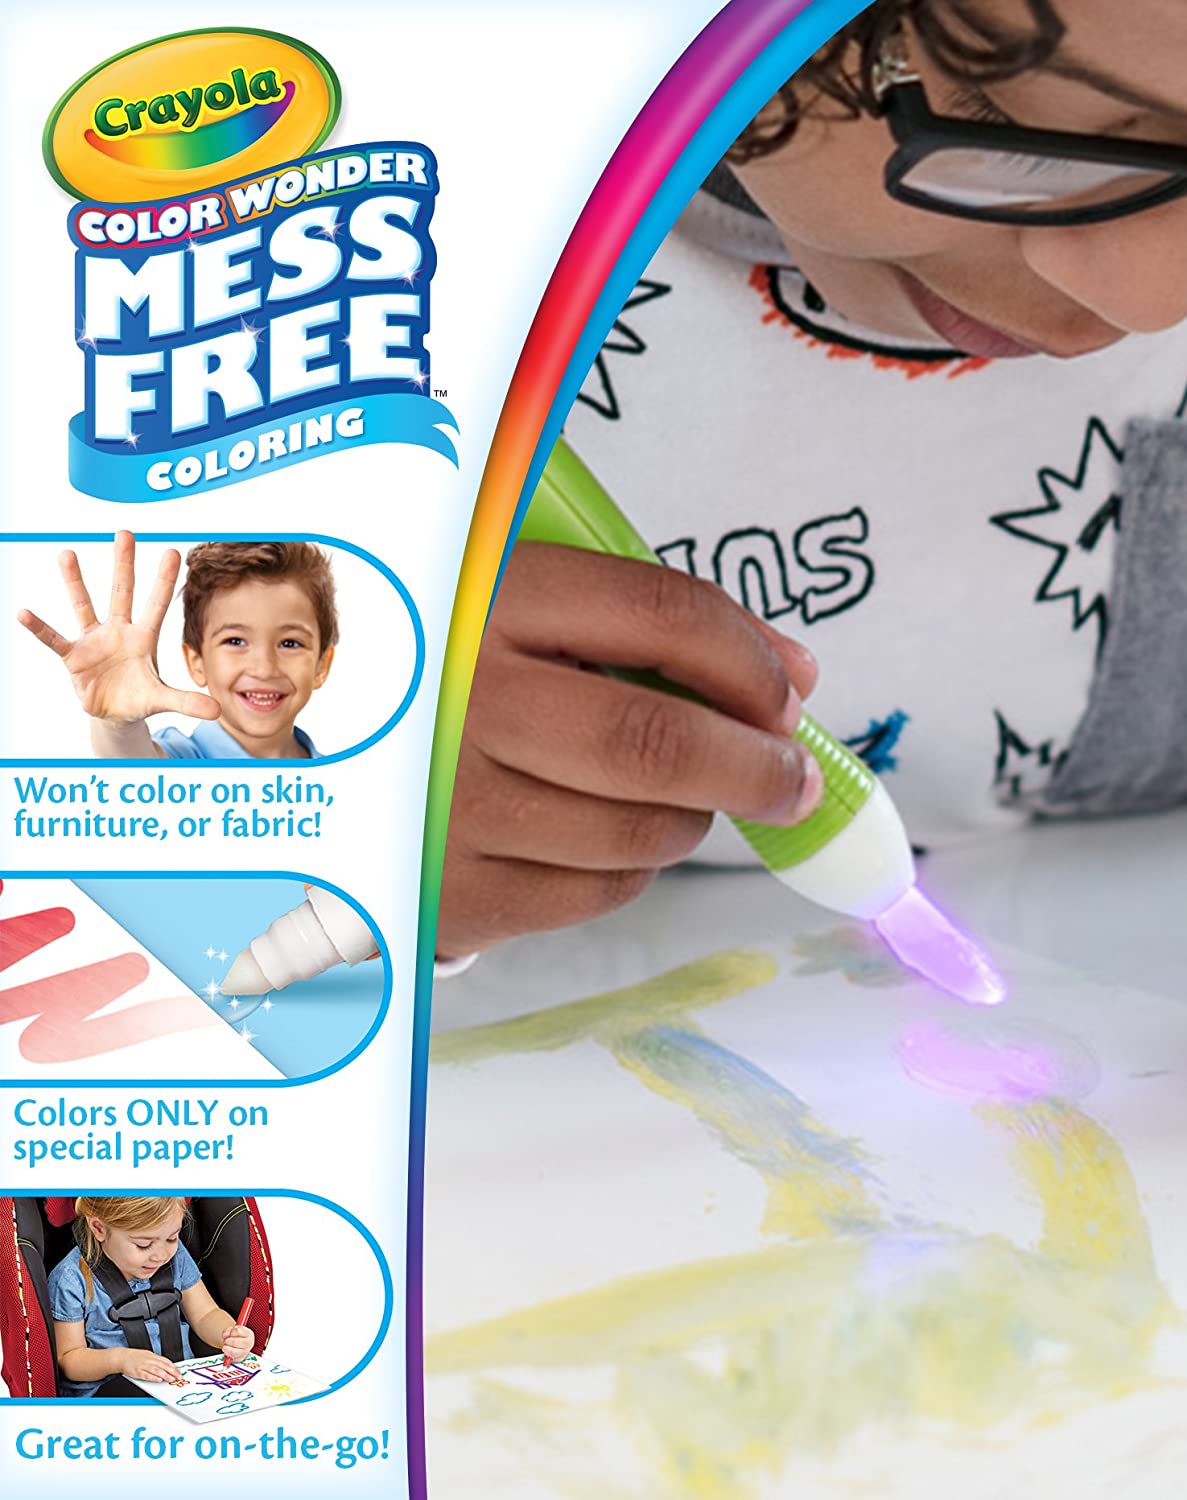 Crayola Color Wonder Magic Light Brush Mess Free Paint Set Kit